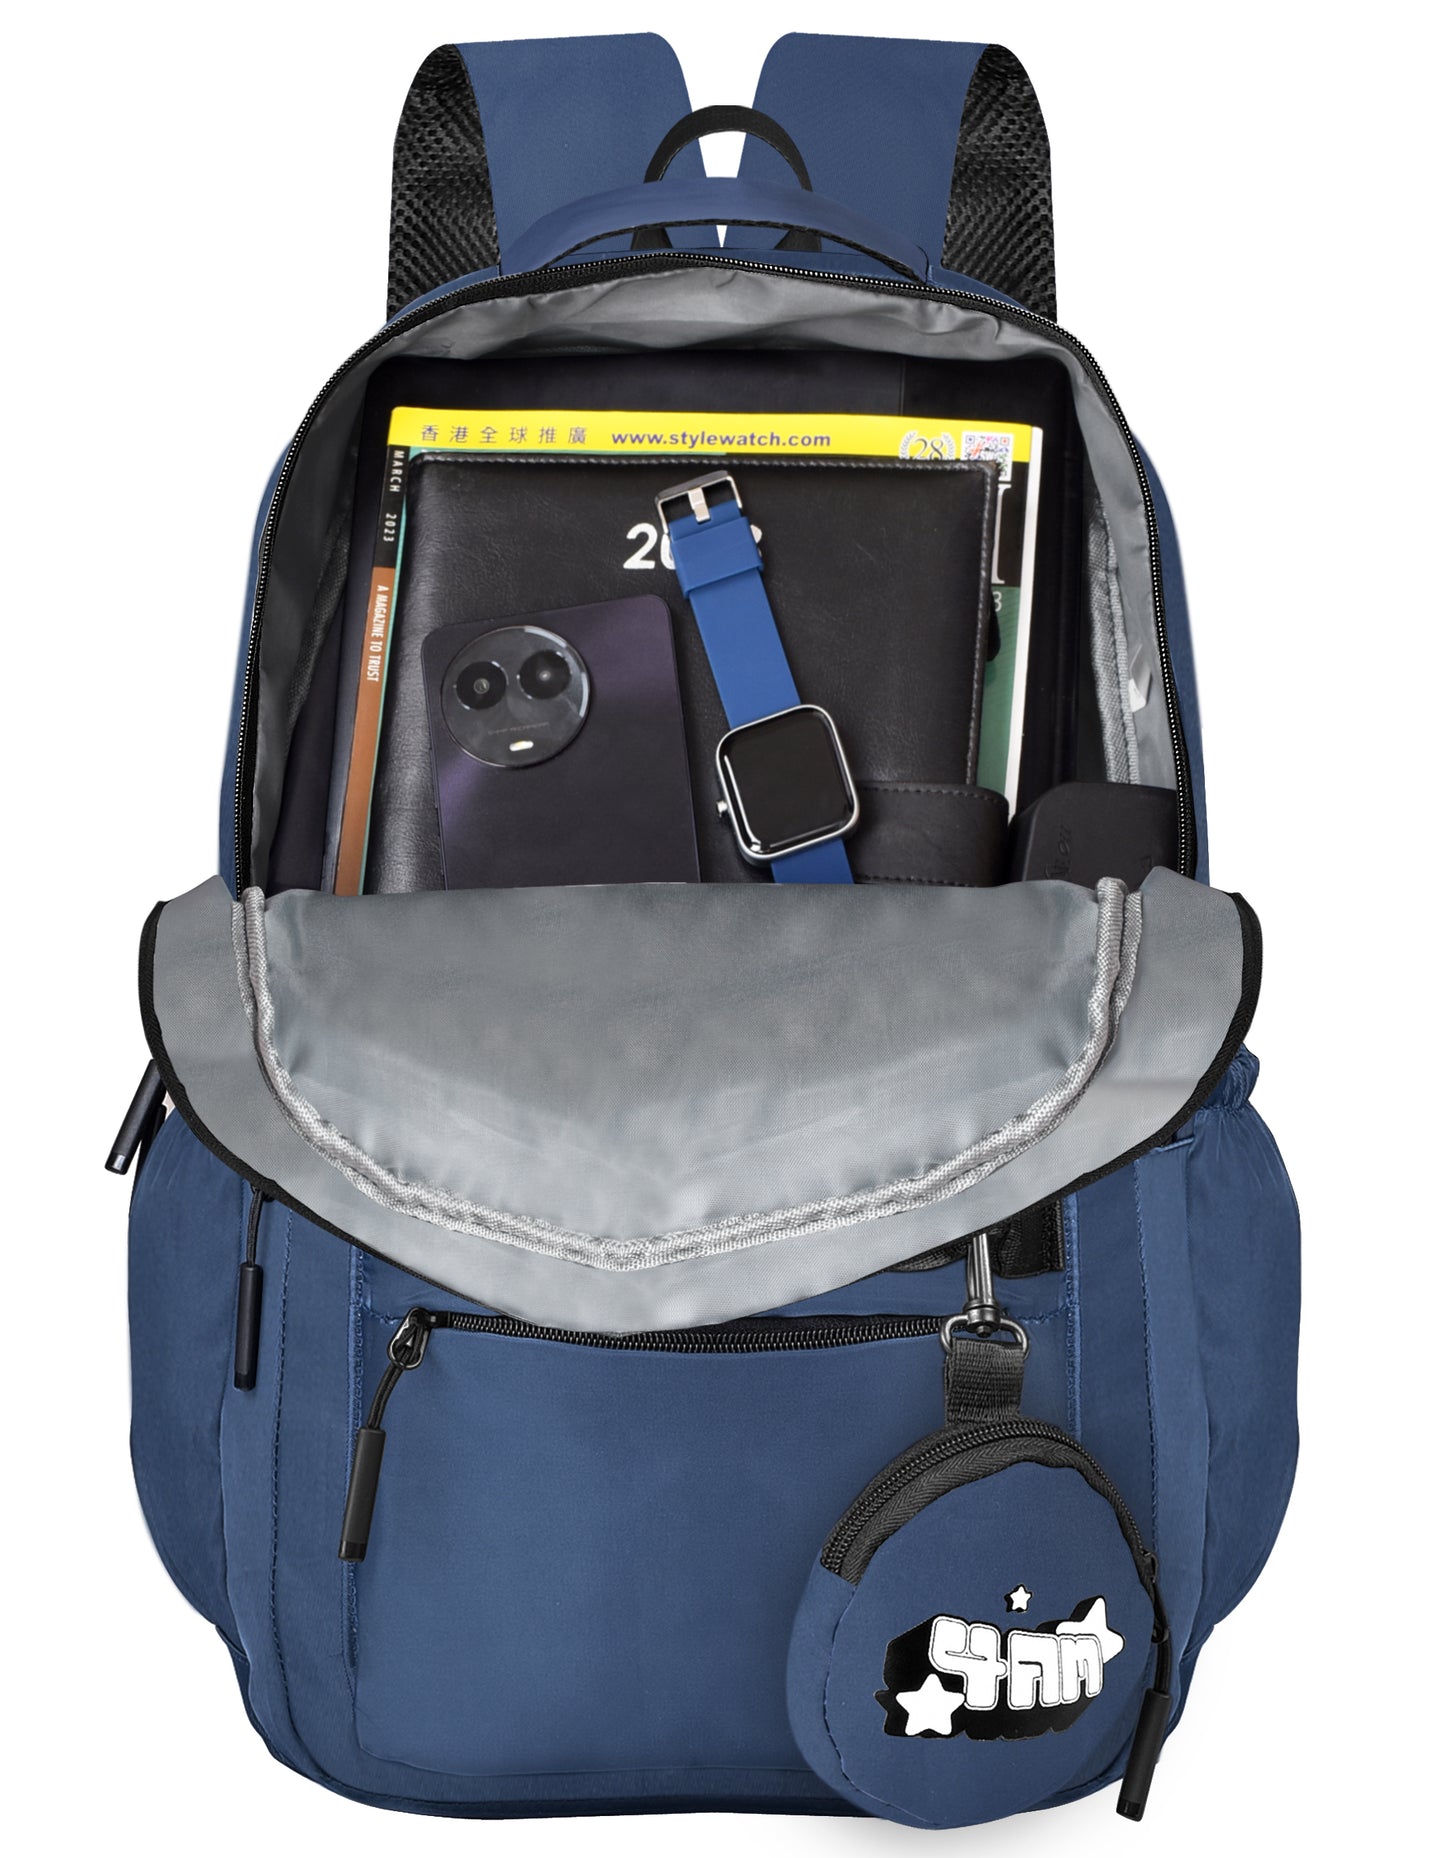 Clouds Love School Bag|Tuition Bag|College Backpack|ForGirls&Women|Waterproof Bag